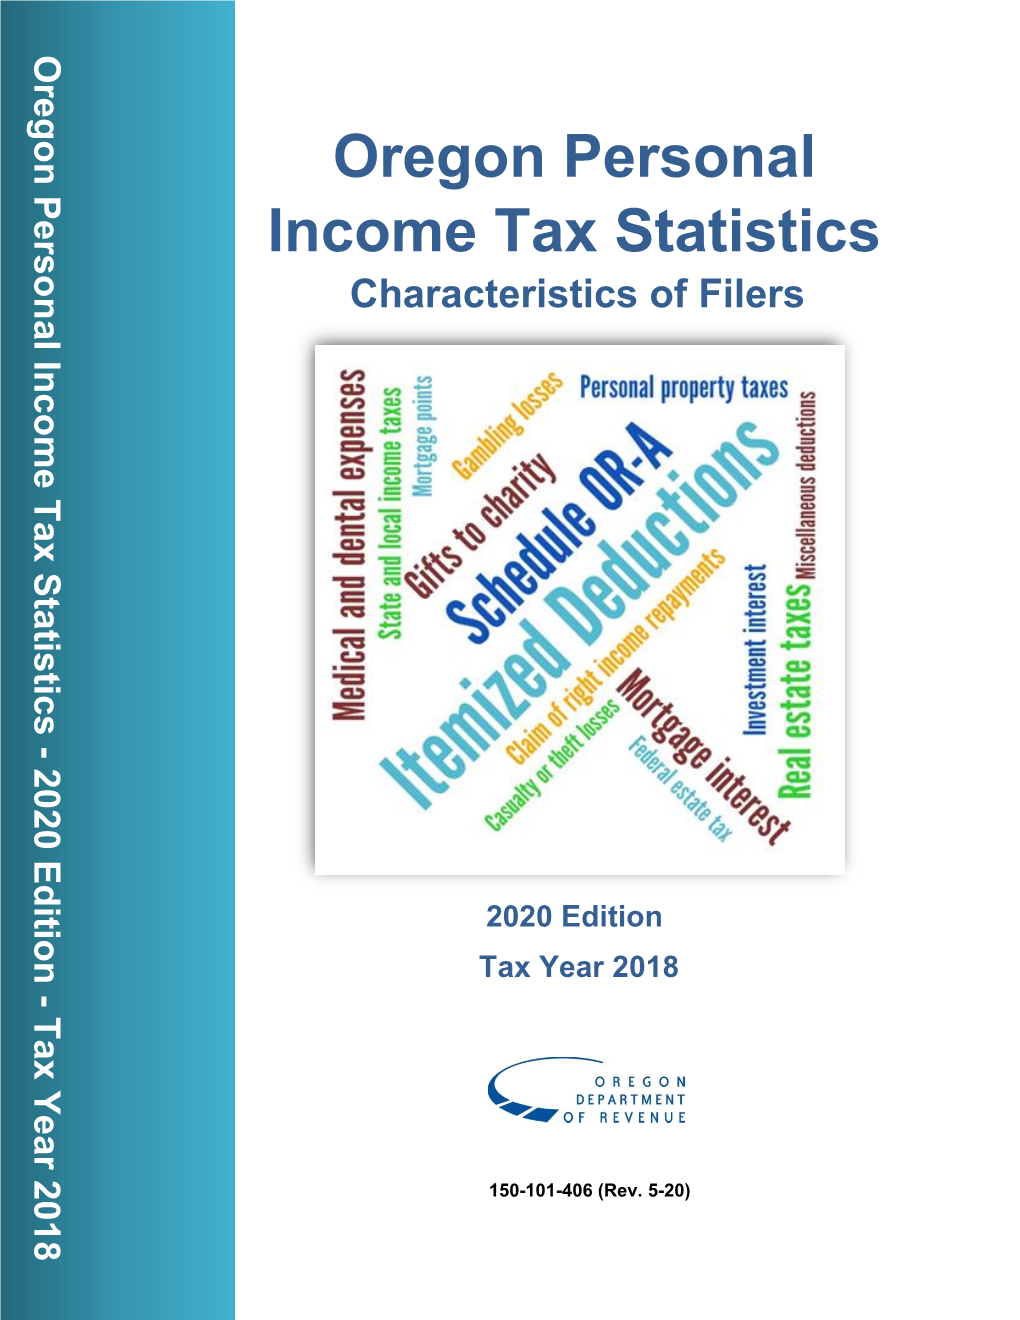 Oregon Personal Income Tax Statistics 2020, 150-101-406